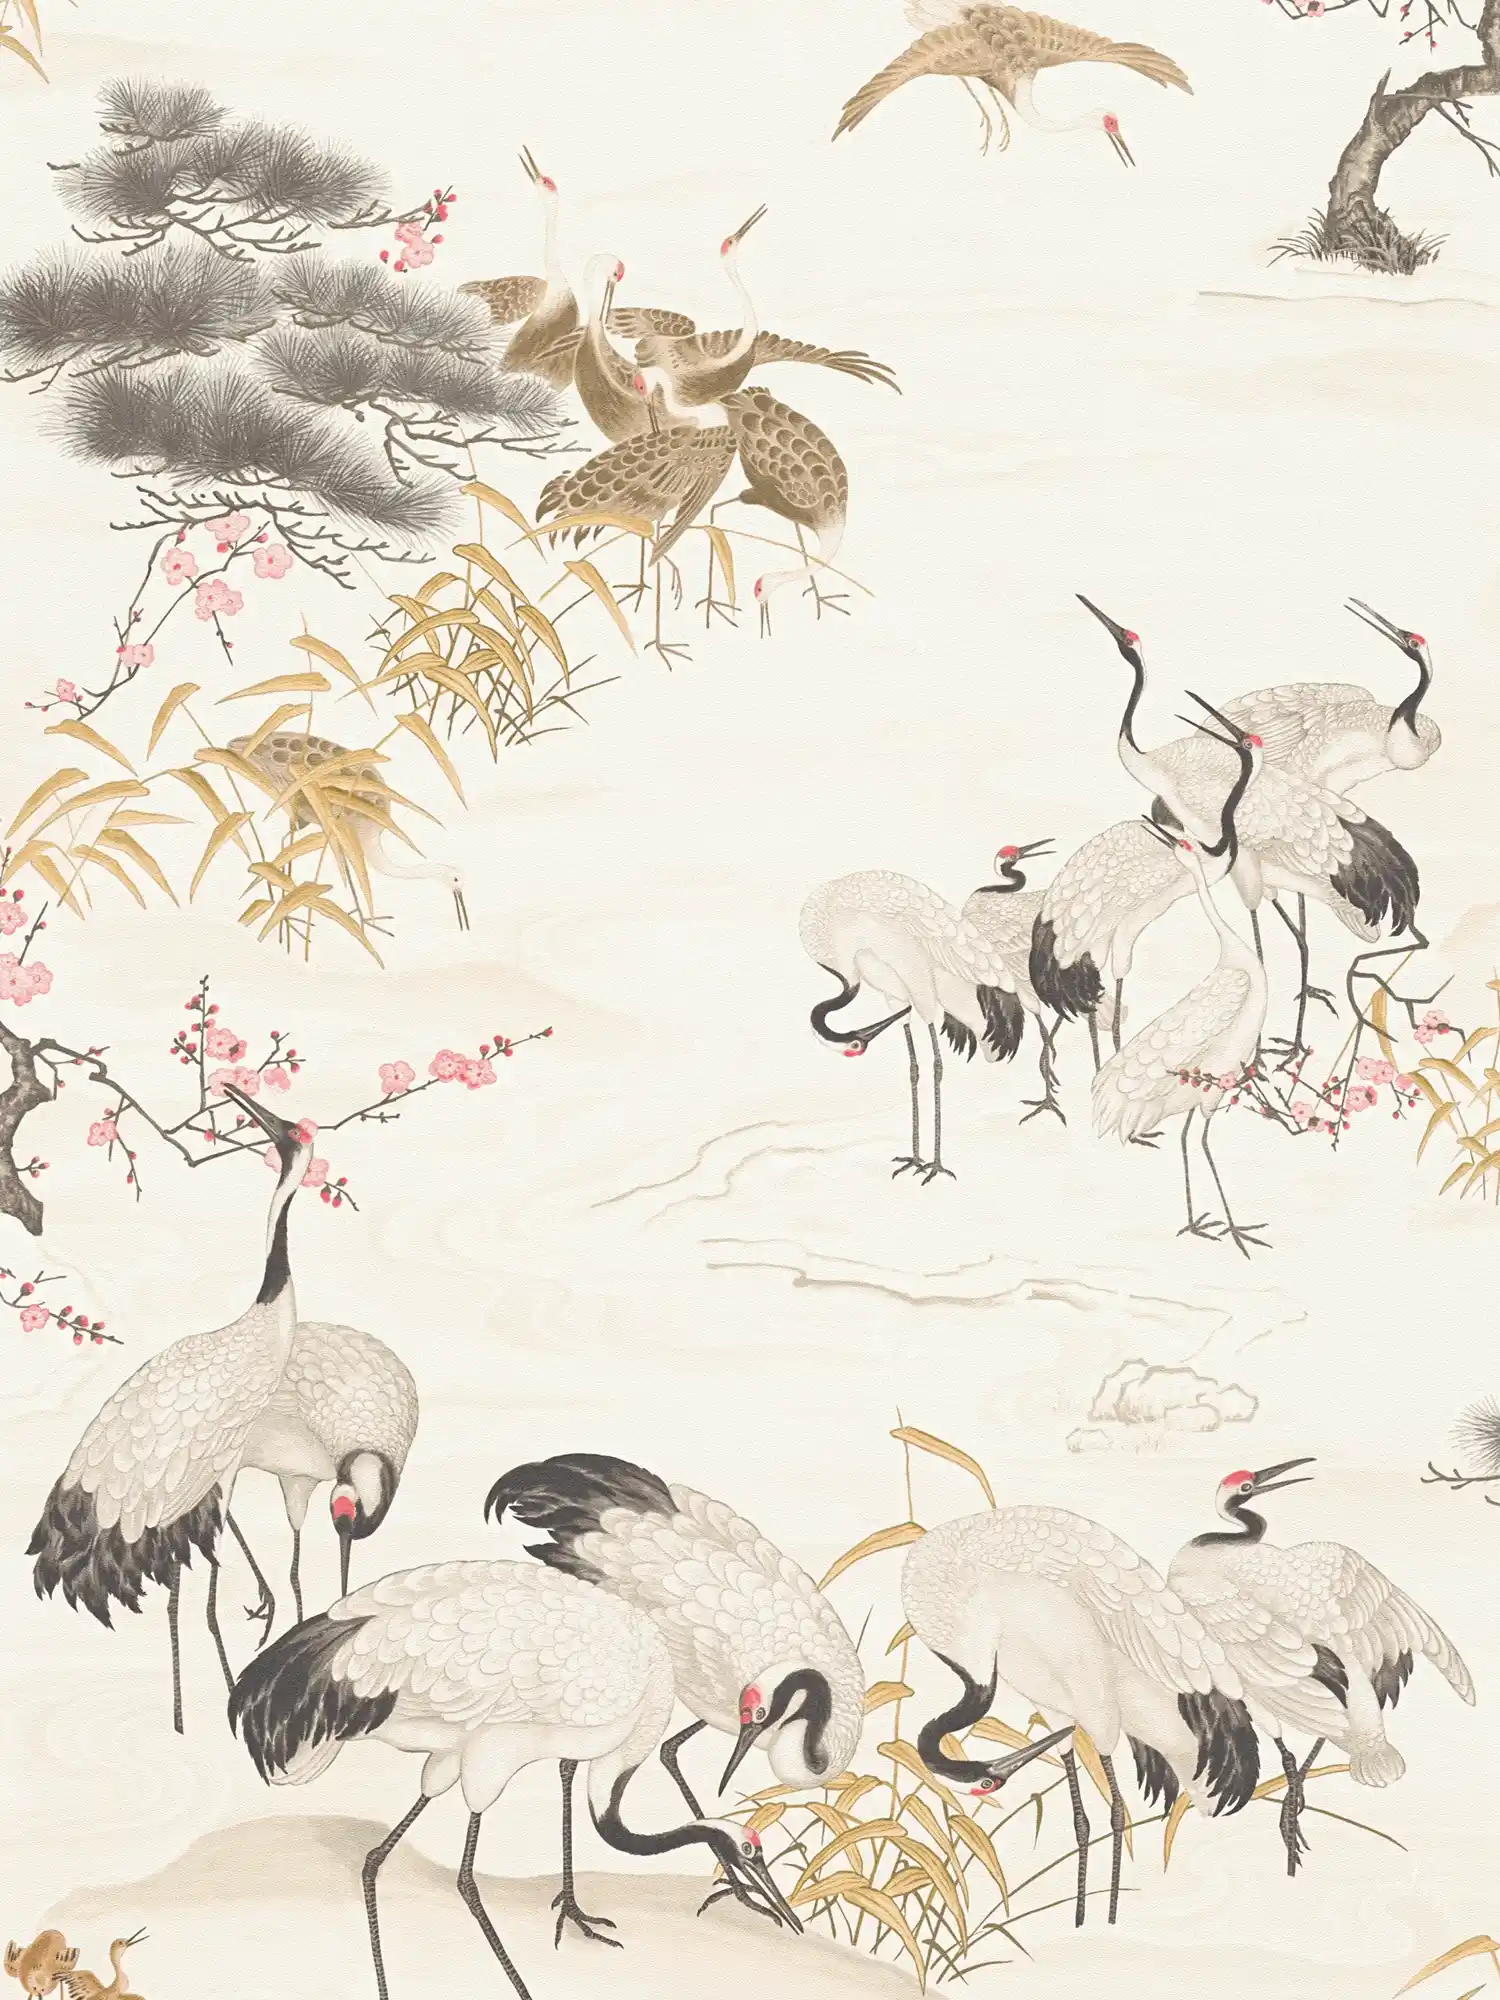 Crane wallpaper Asian style with animal pattern - cream
